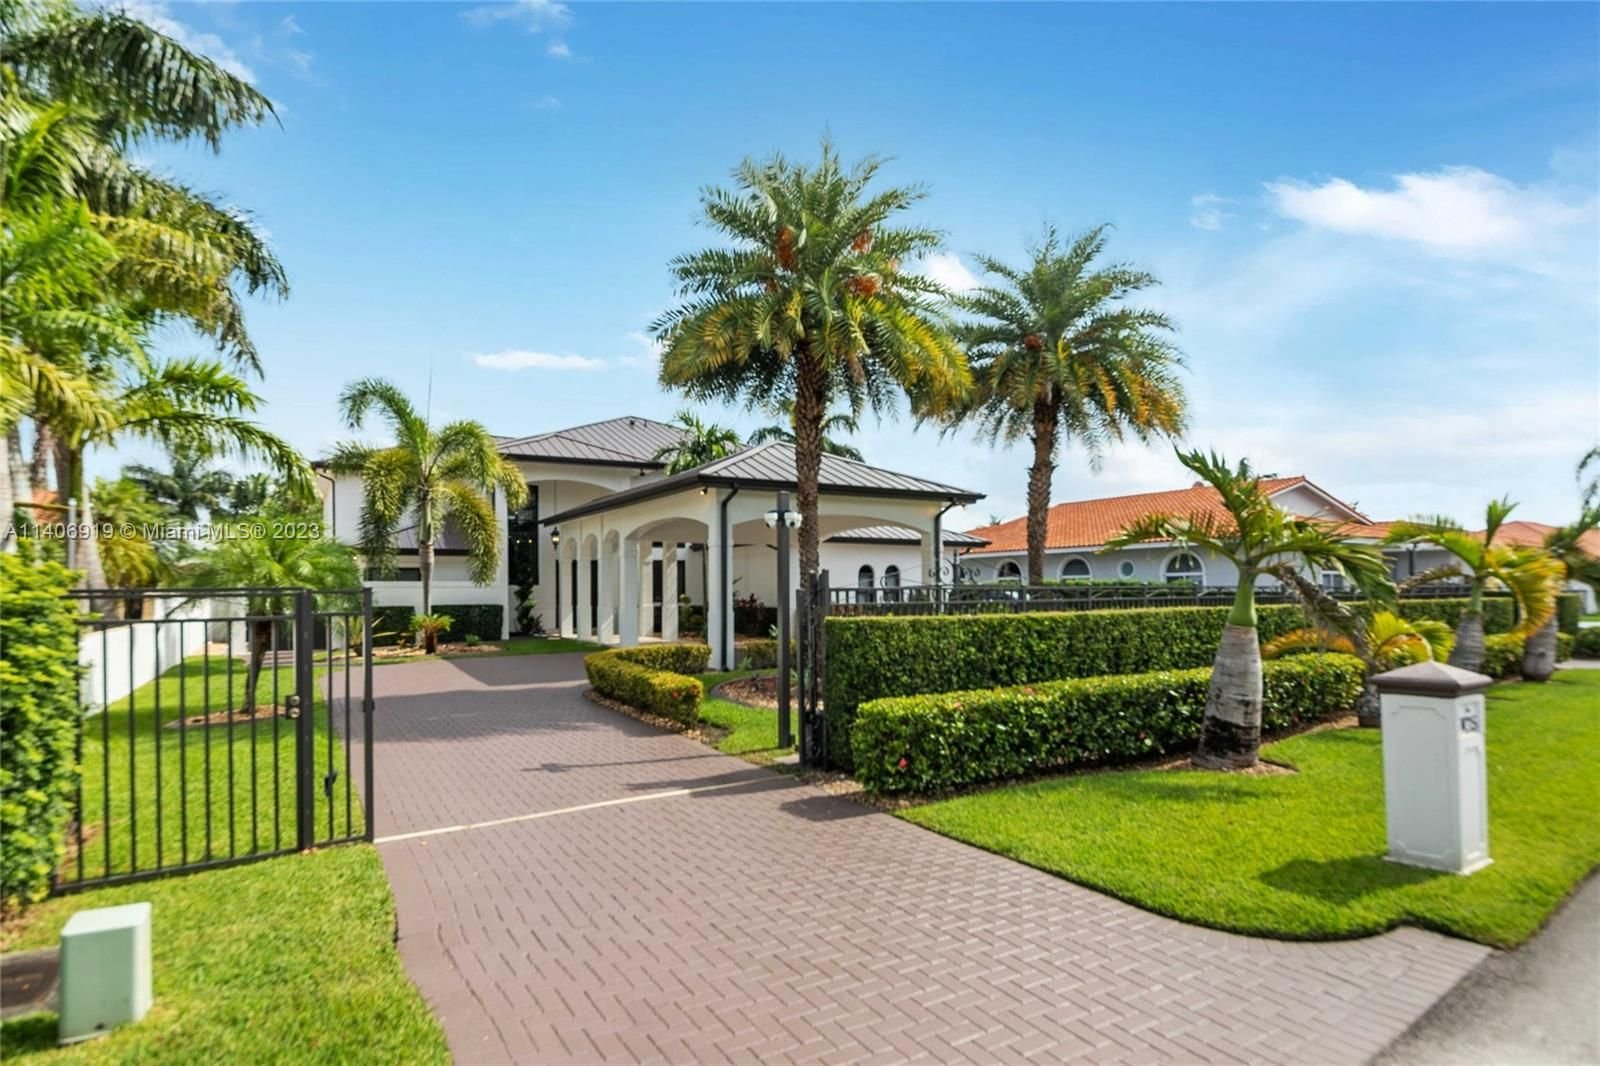 Real estate property located at 7435 Augusta Dr, Miami-Dade County, Miami, FL